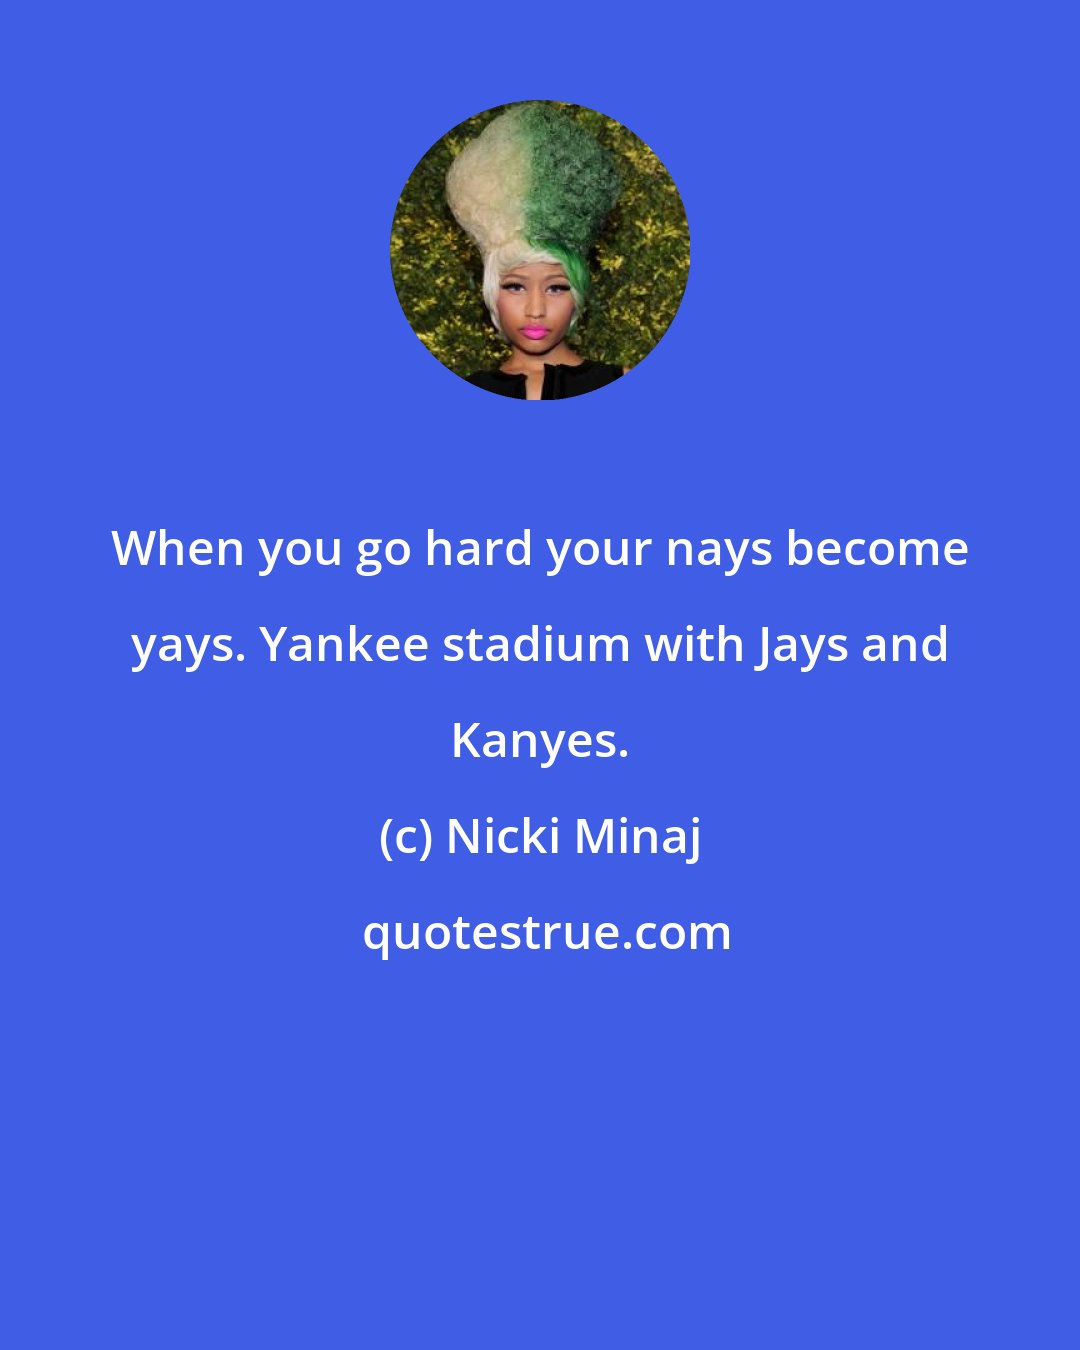 Nicki Minaj: When you go hard your nays become yays. Yankee stadium with Jays and Kanyes.